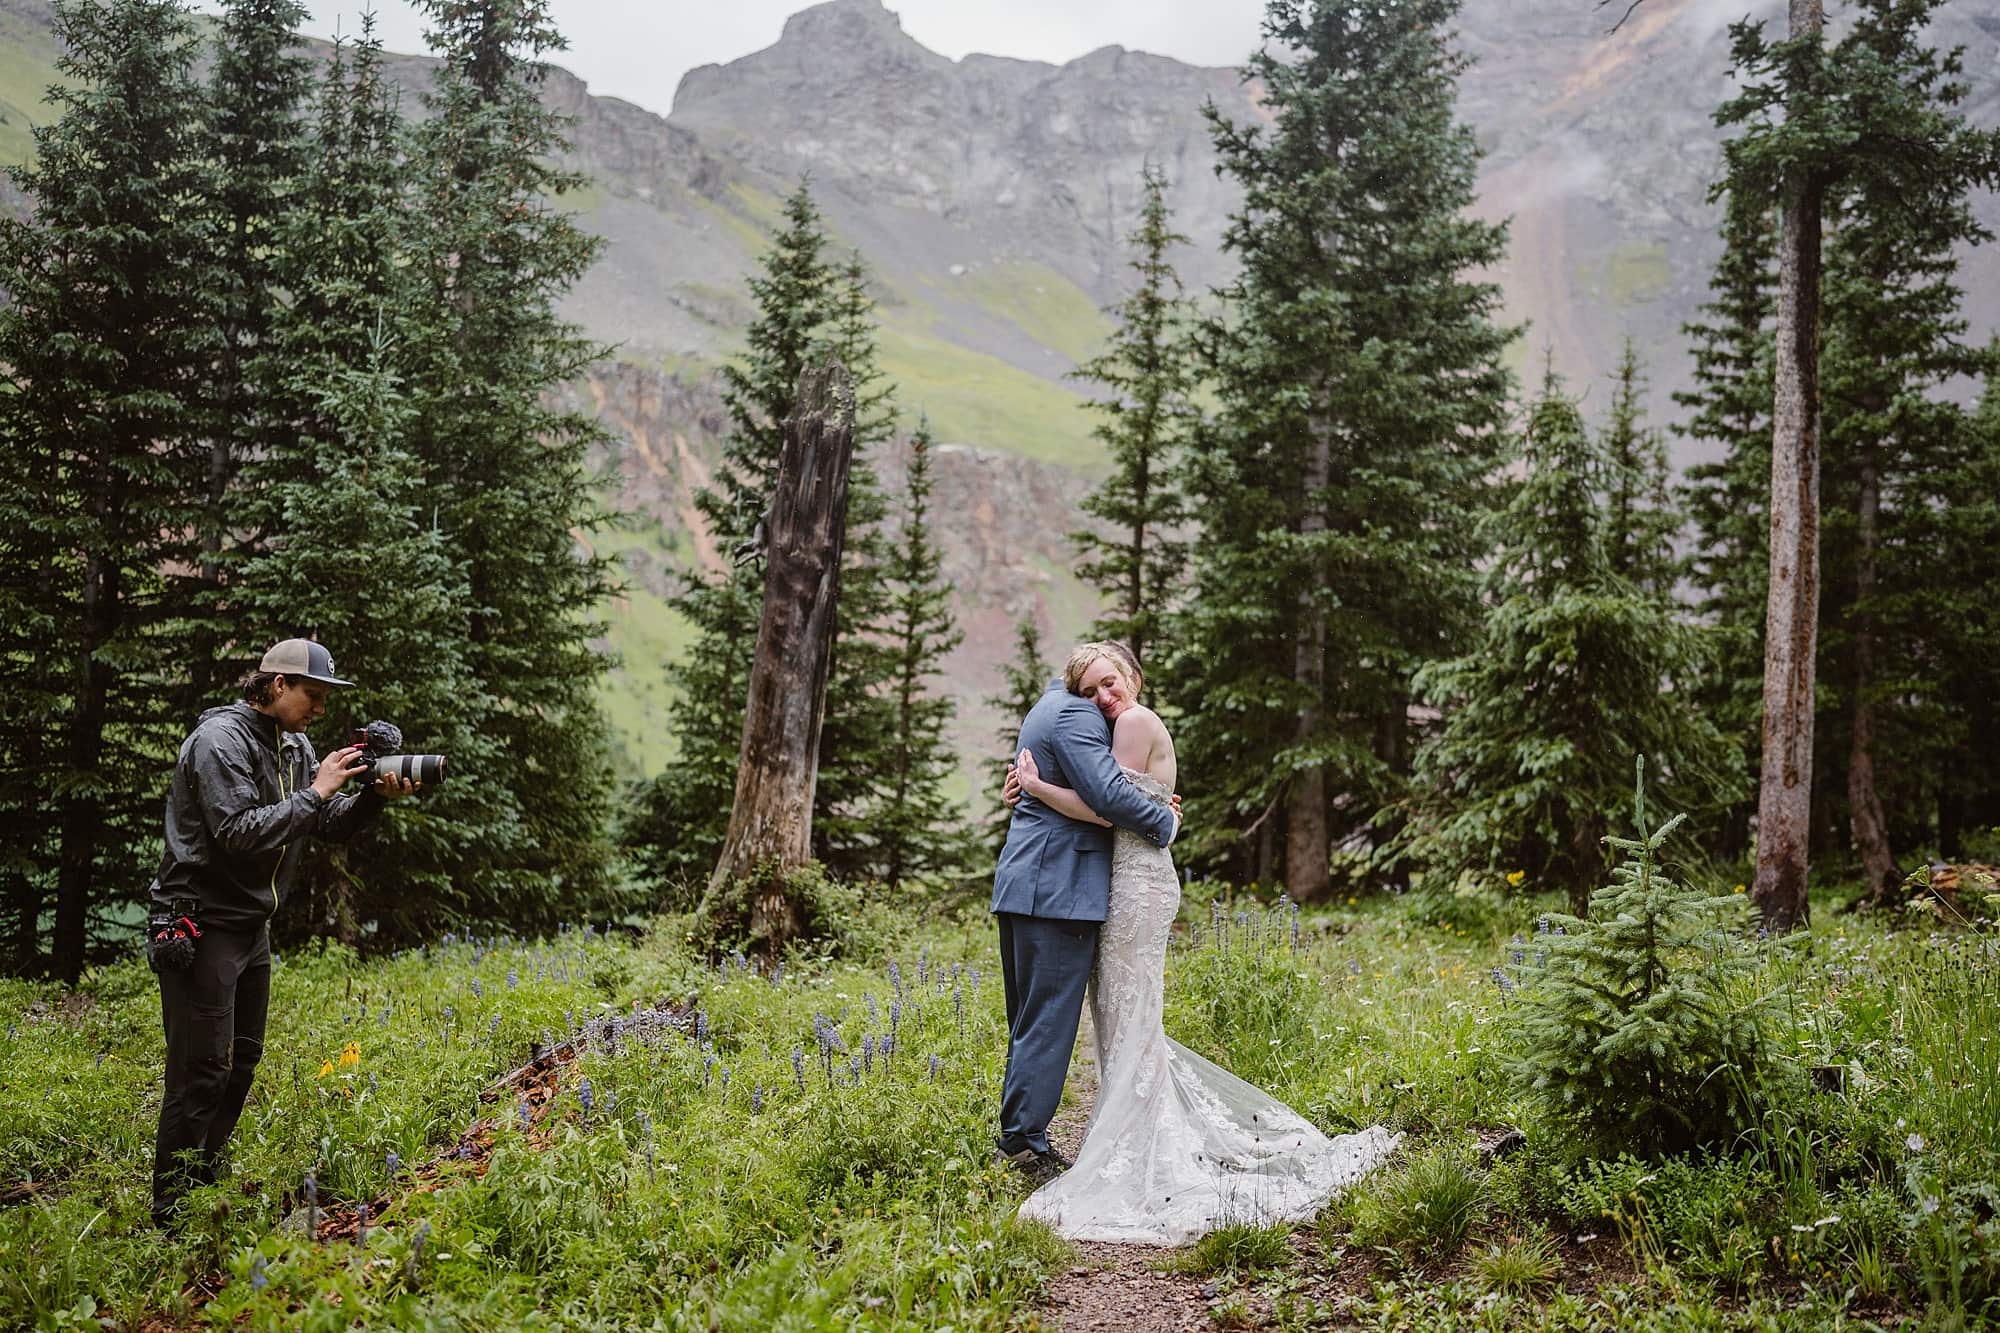 An elopement videographer captures a couple embracing during their elopement